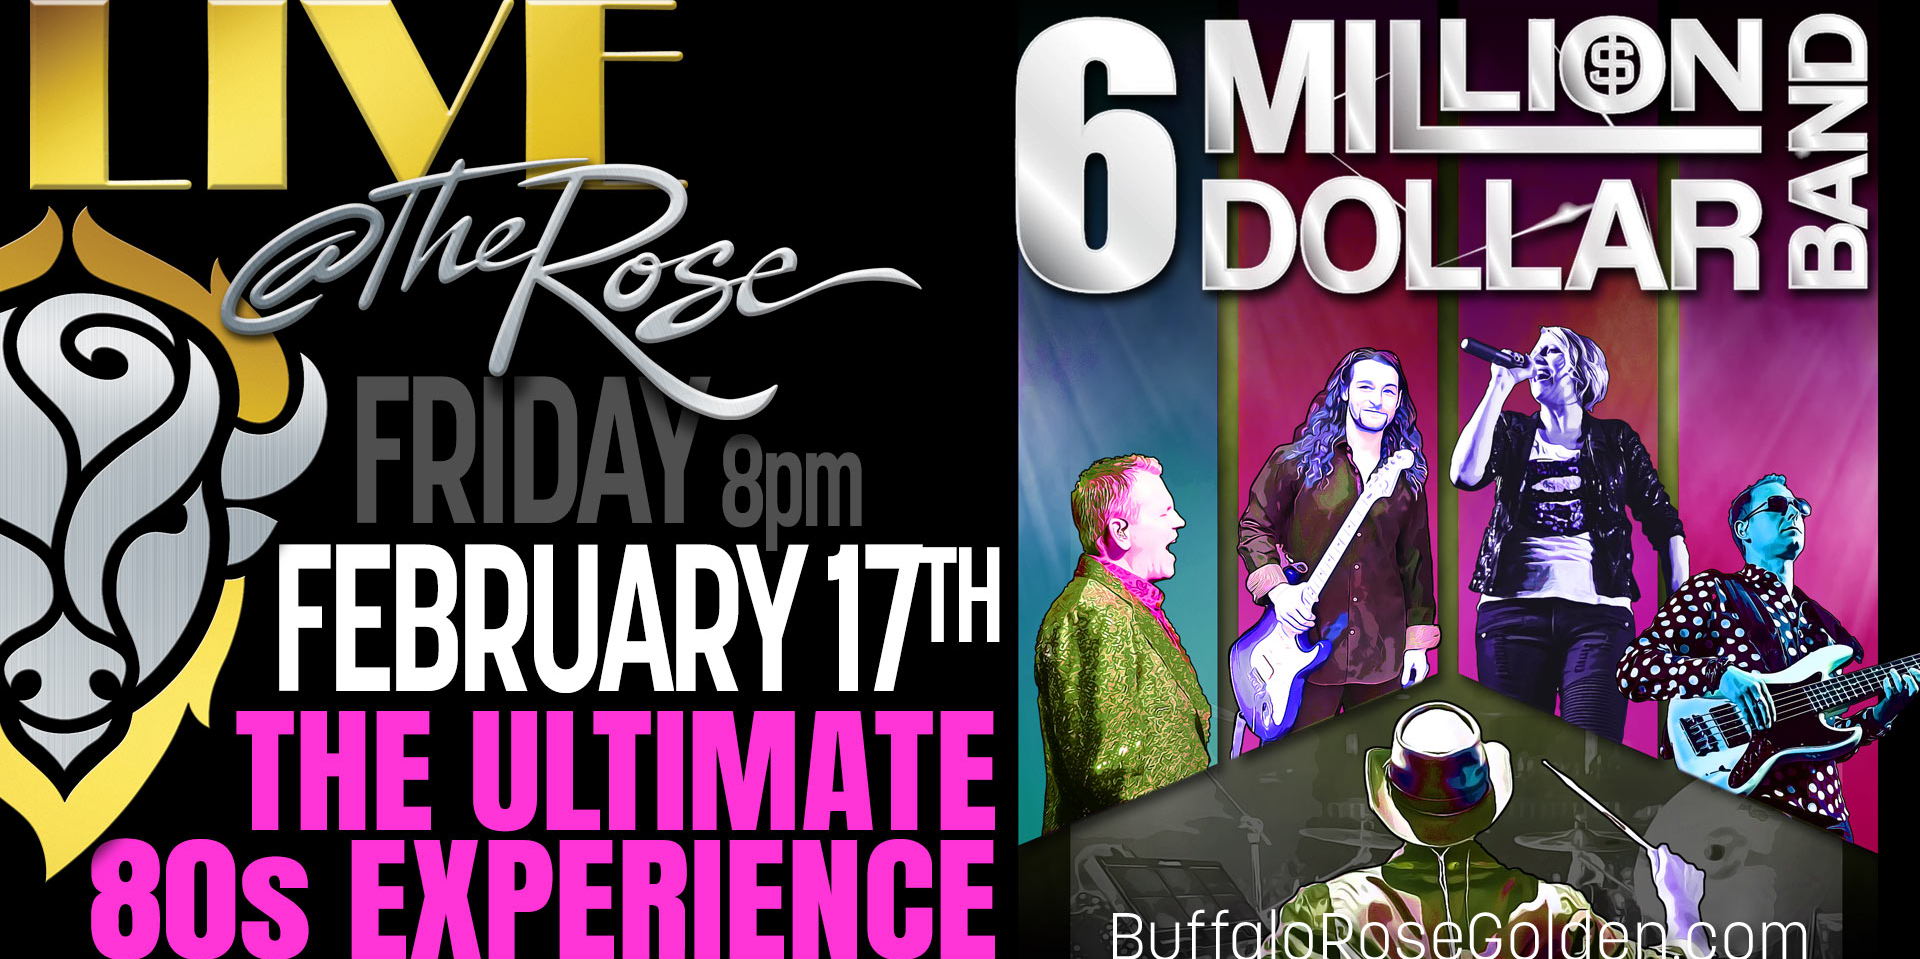 Live @ The Rose - 6 Million Dollar Band promotional image